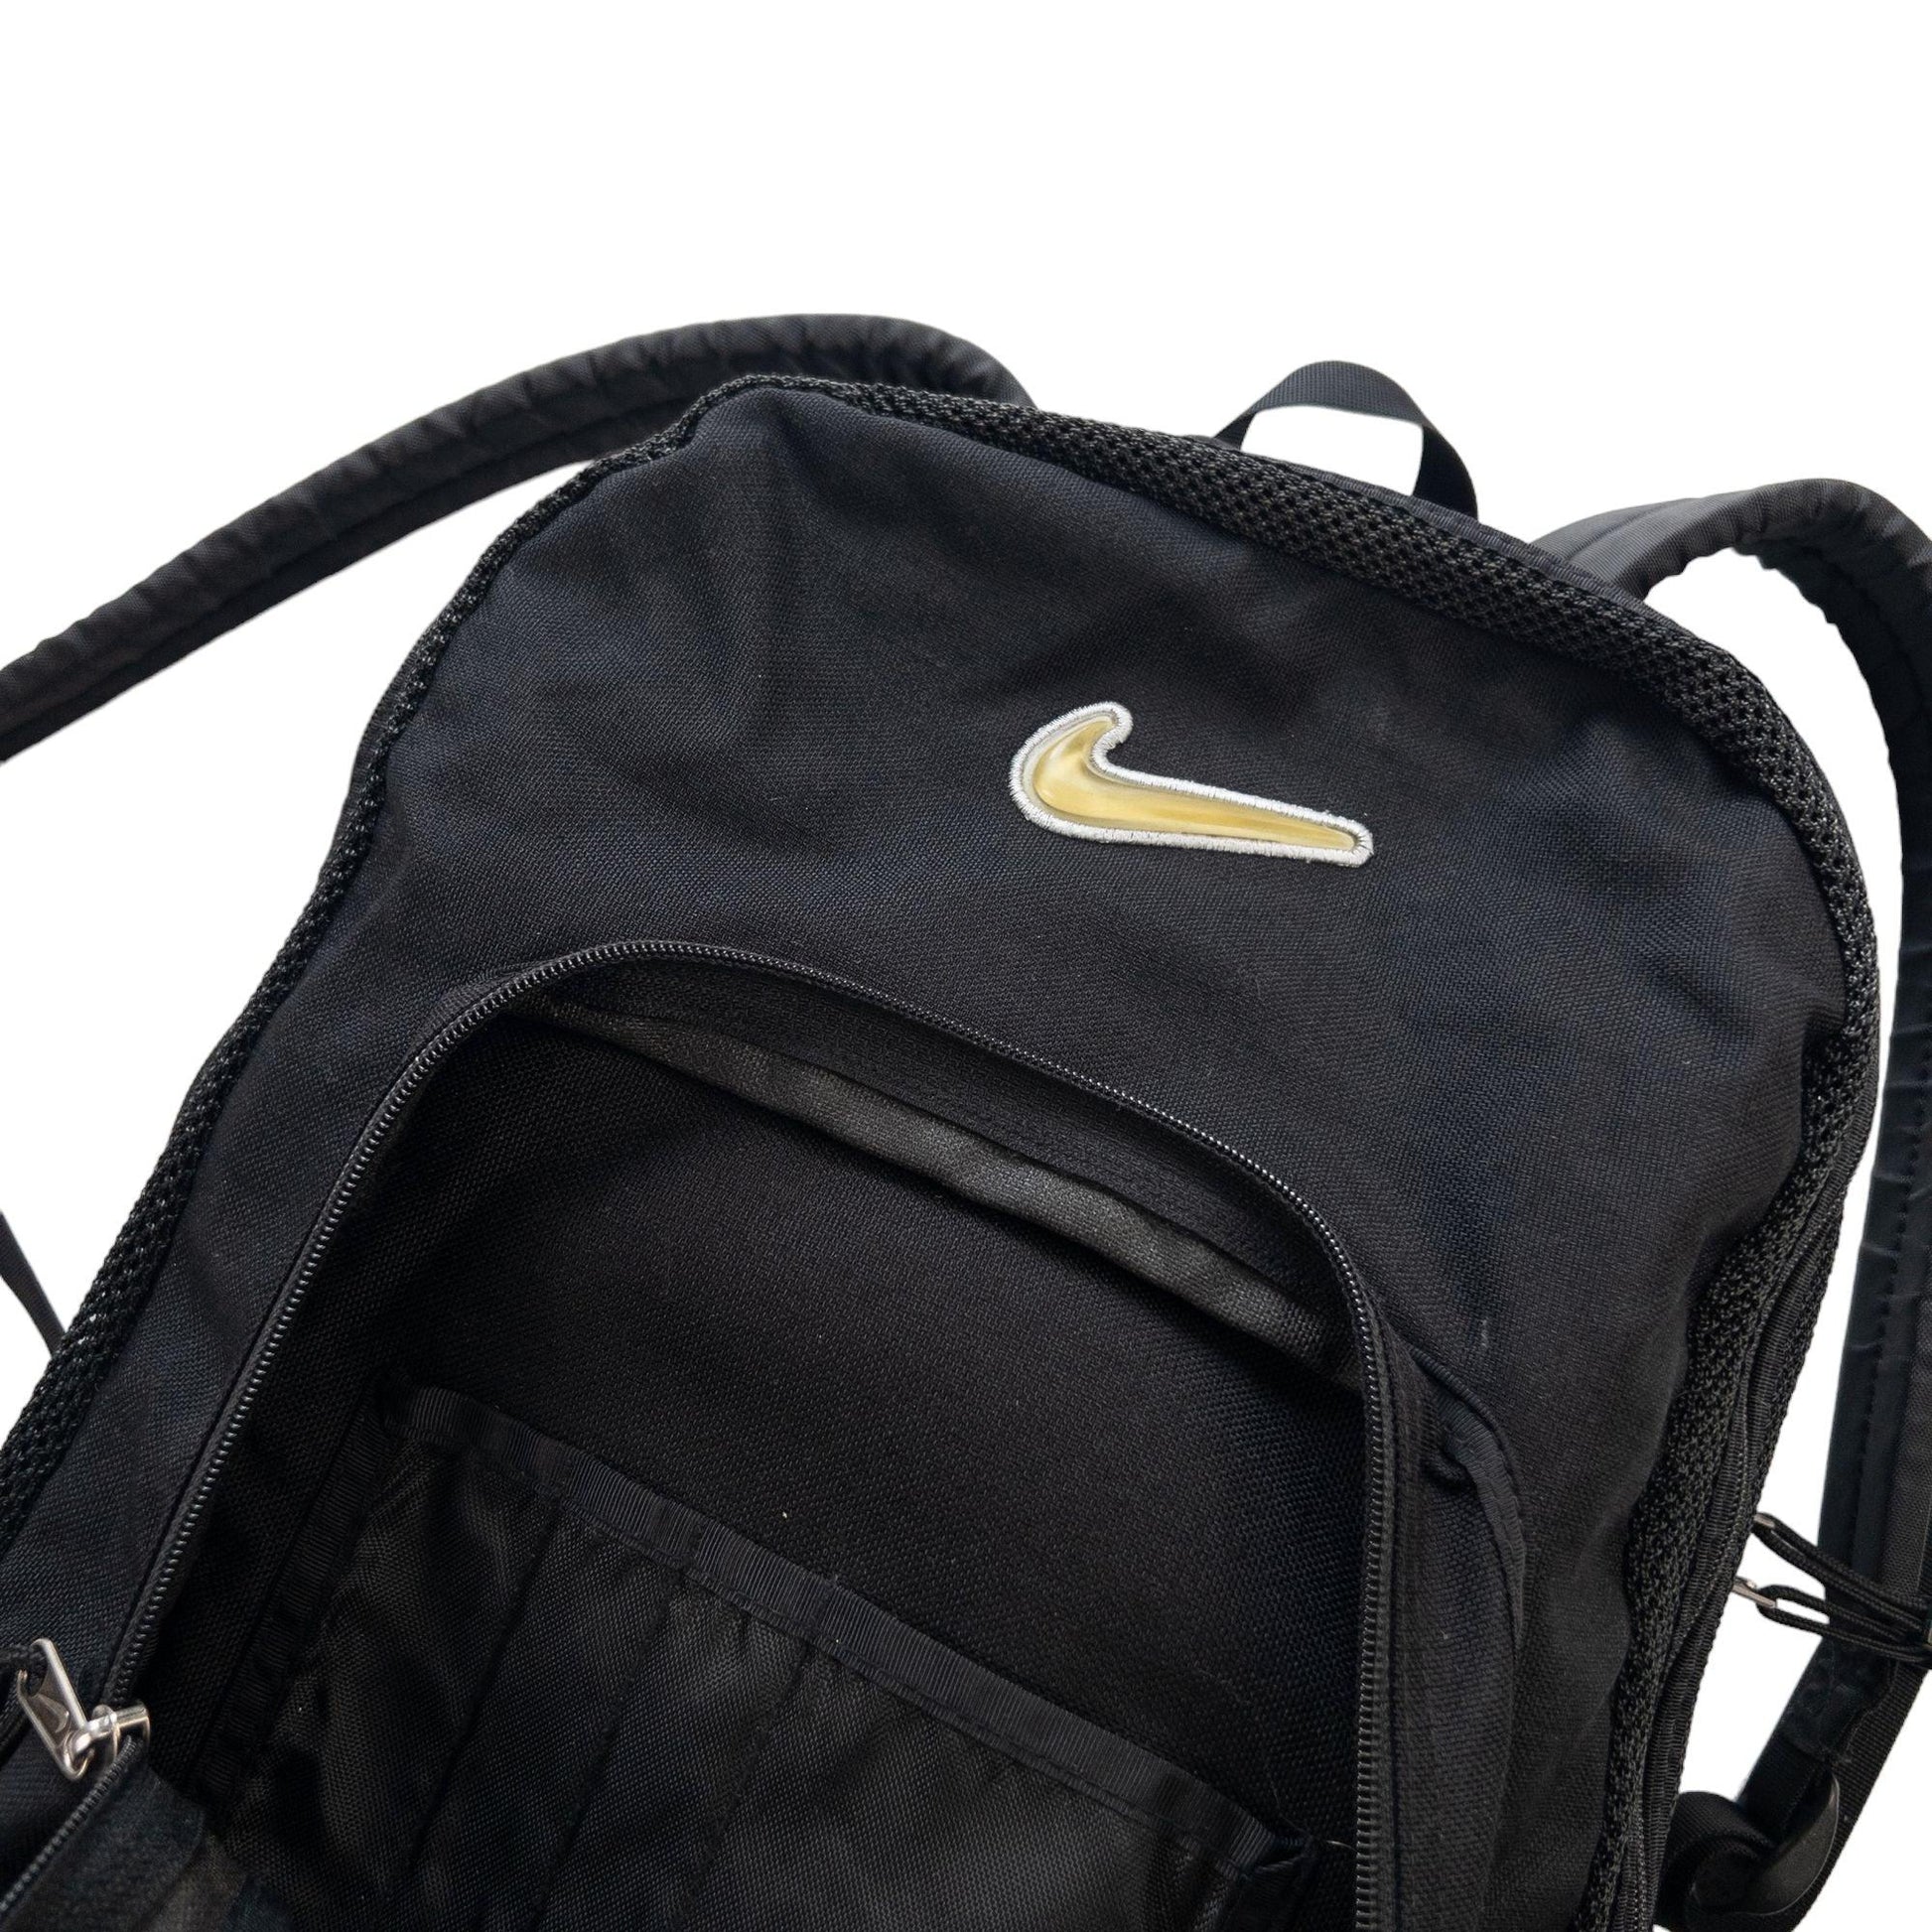 Vintage Nike Jewel Swoosh Backpack - Known Source